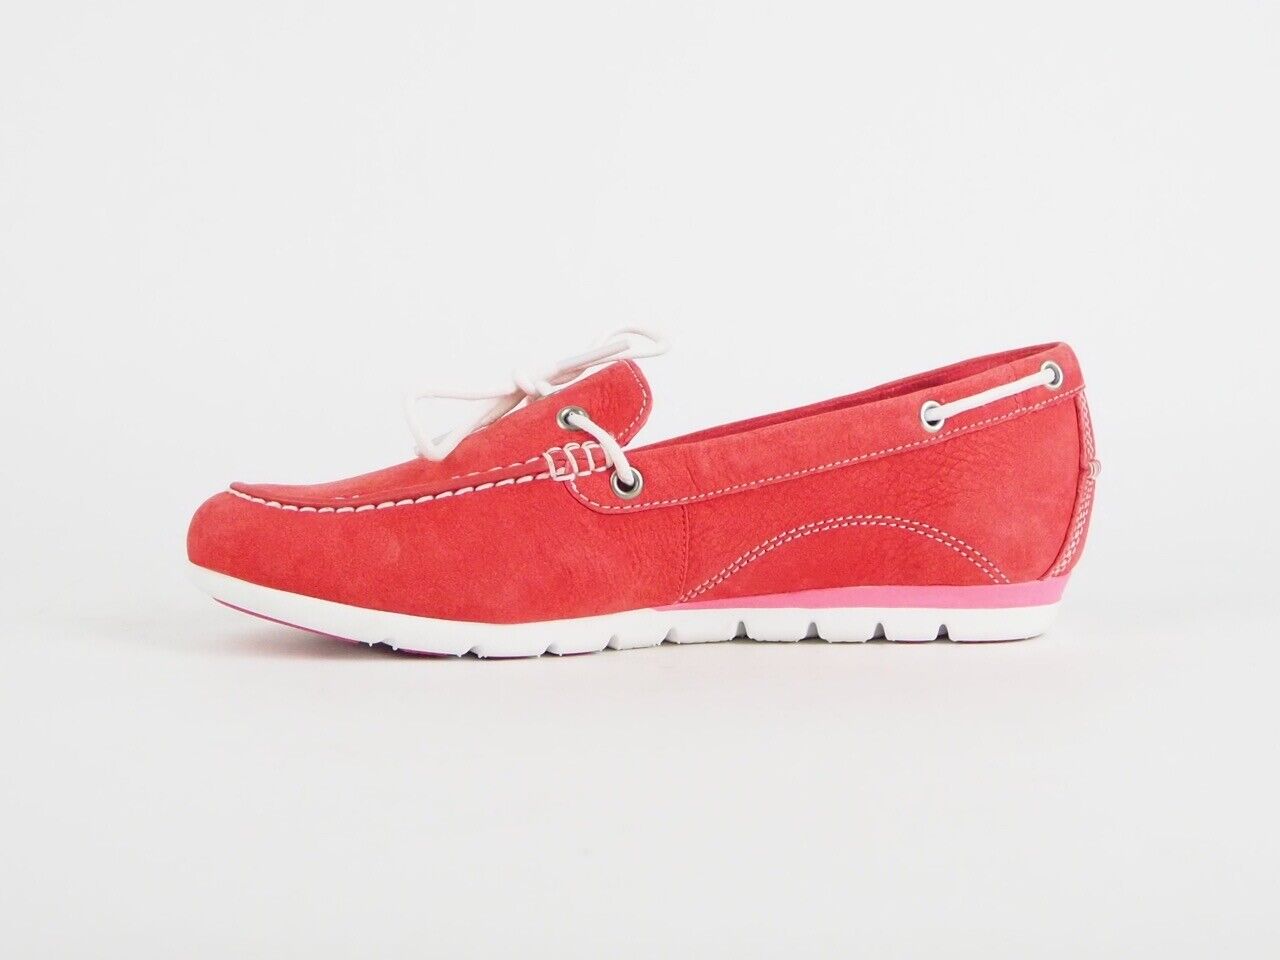 Womens Timberland Ek Harbrside 1Eye Boat Red 8420B Leather Flat Slips On Shoes - London Top Style